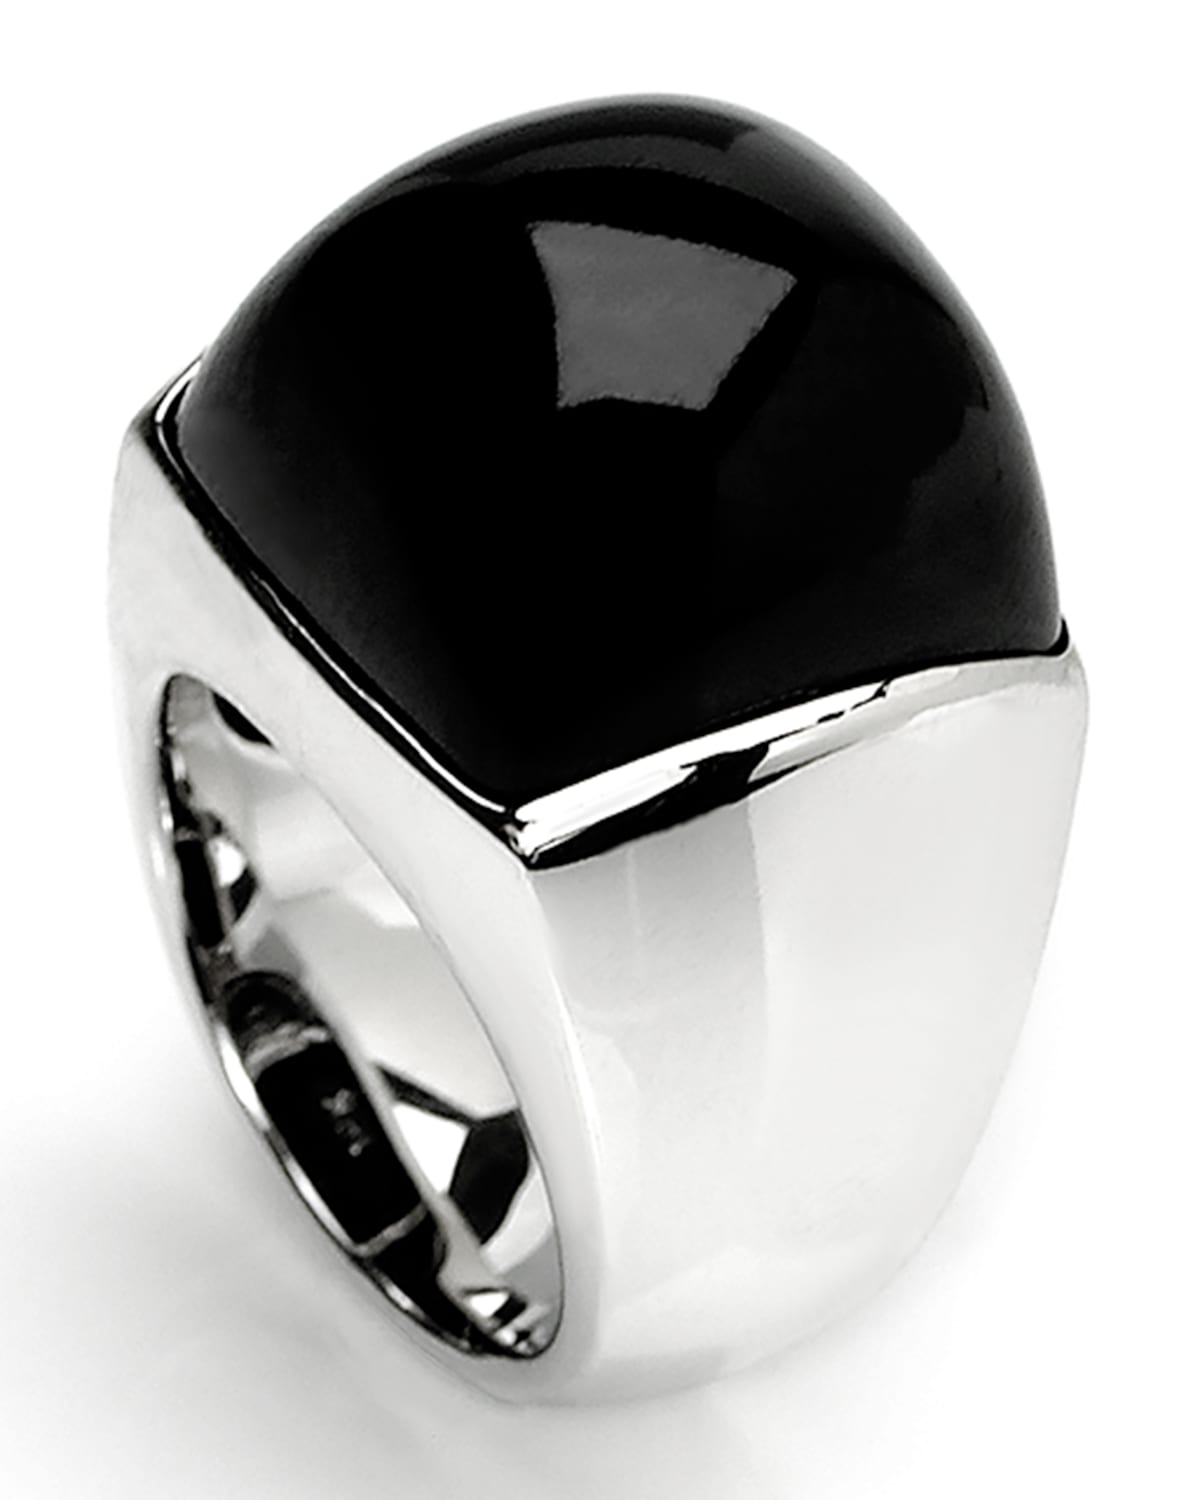 David C.A. Lin 18K White Gold & Black Jade Dome Ring Size 7.5